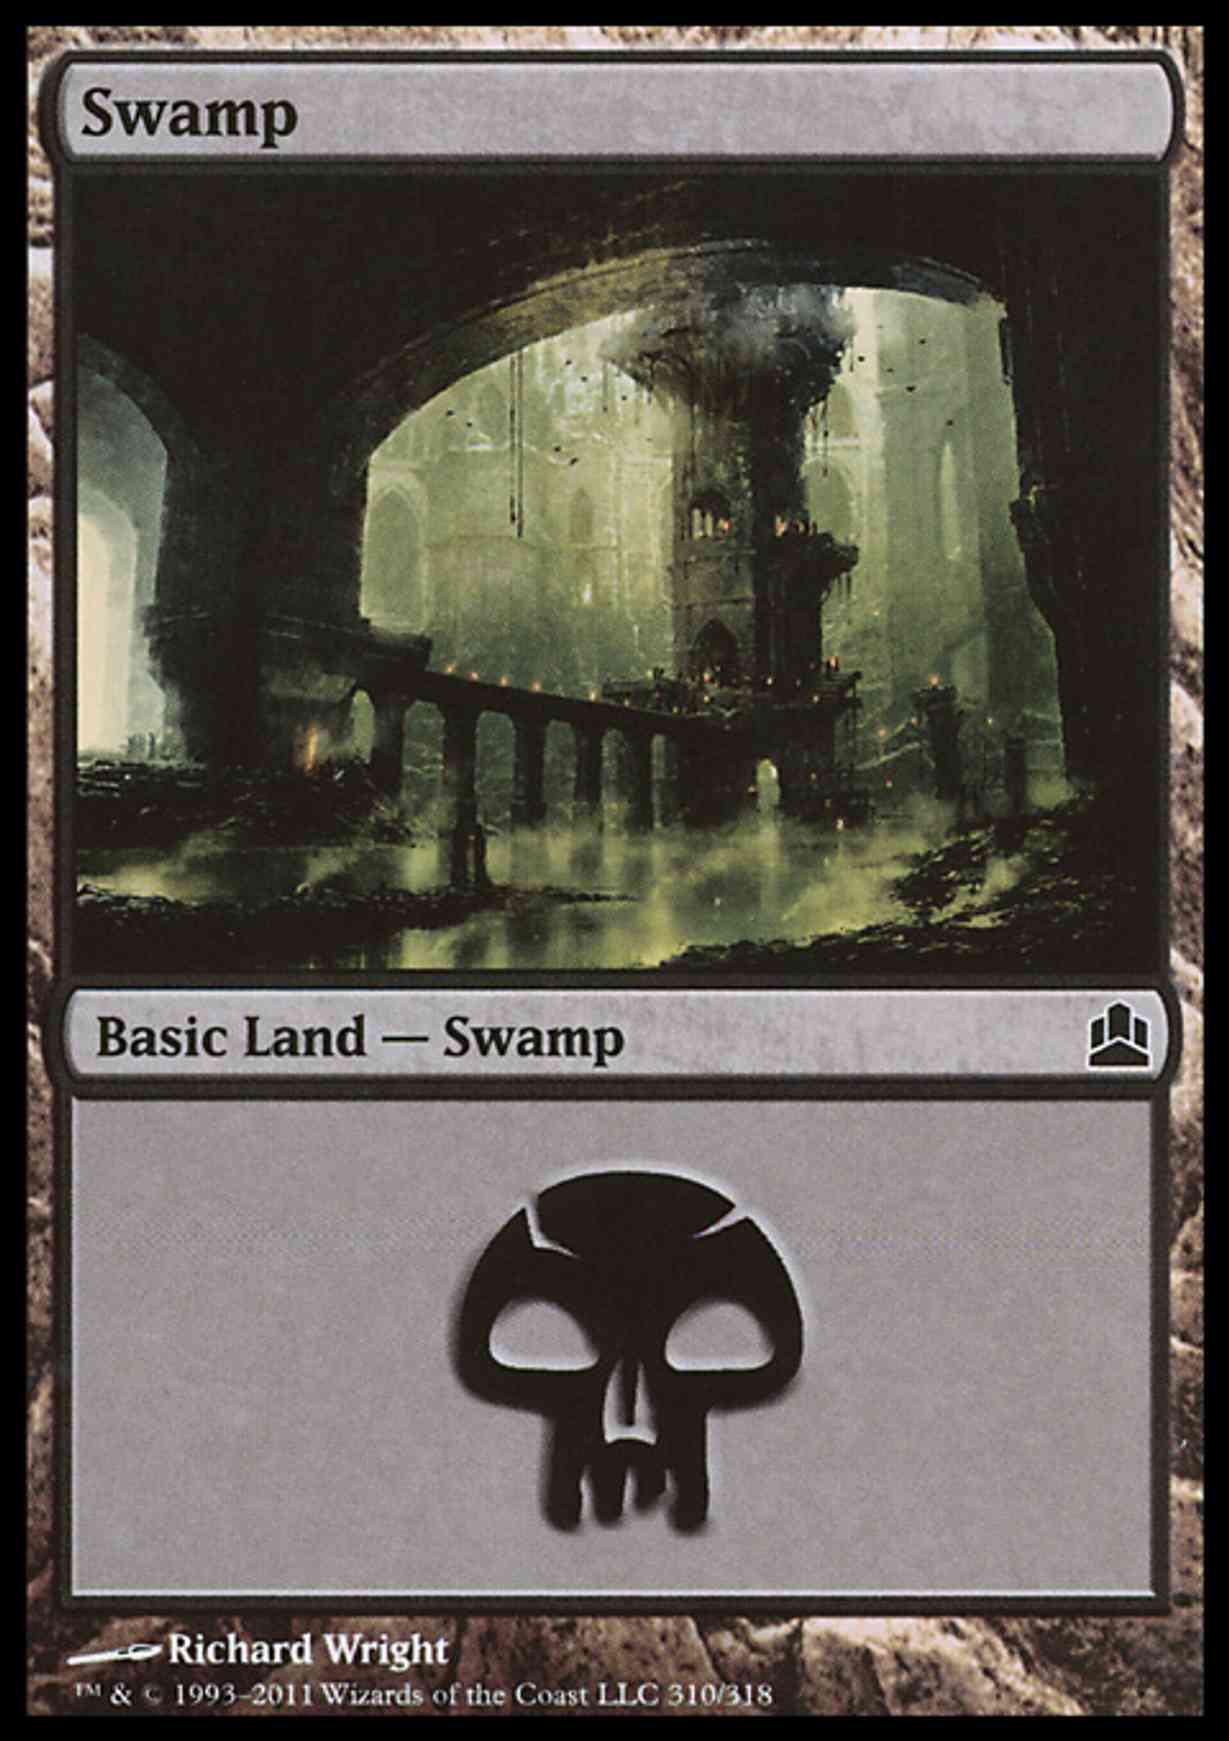 Swamp (310) magic card front